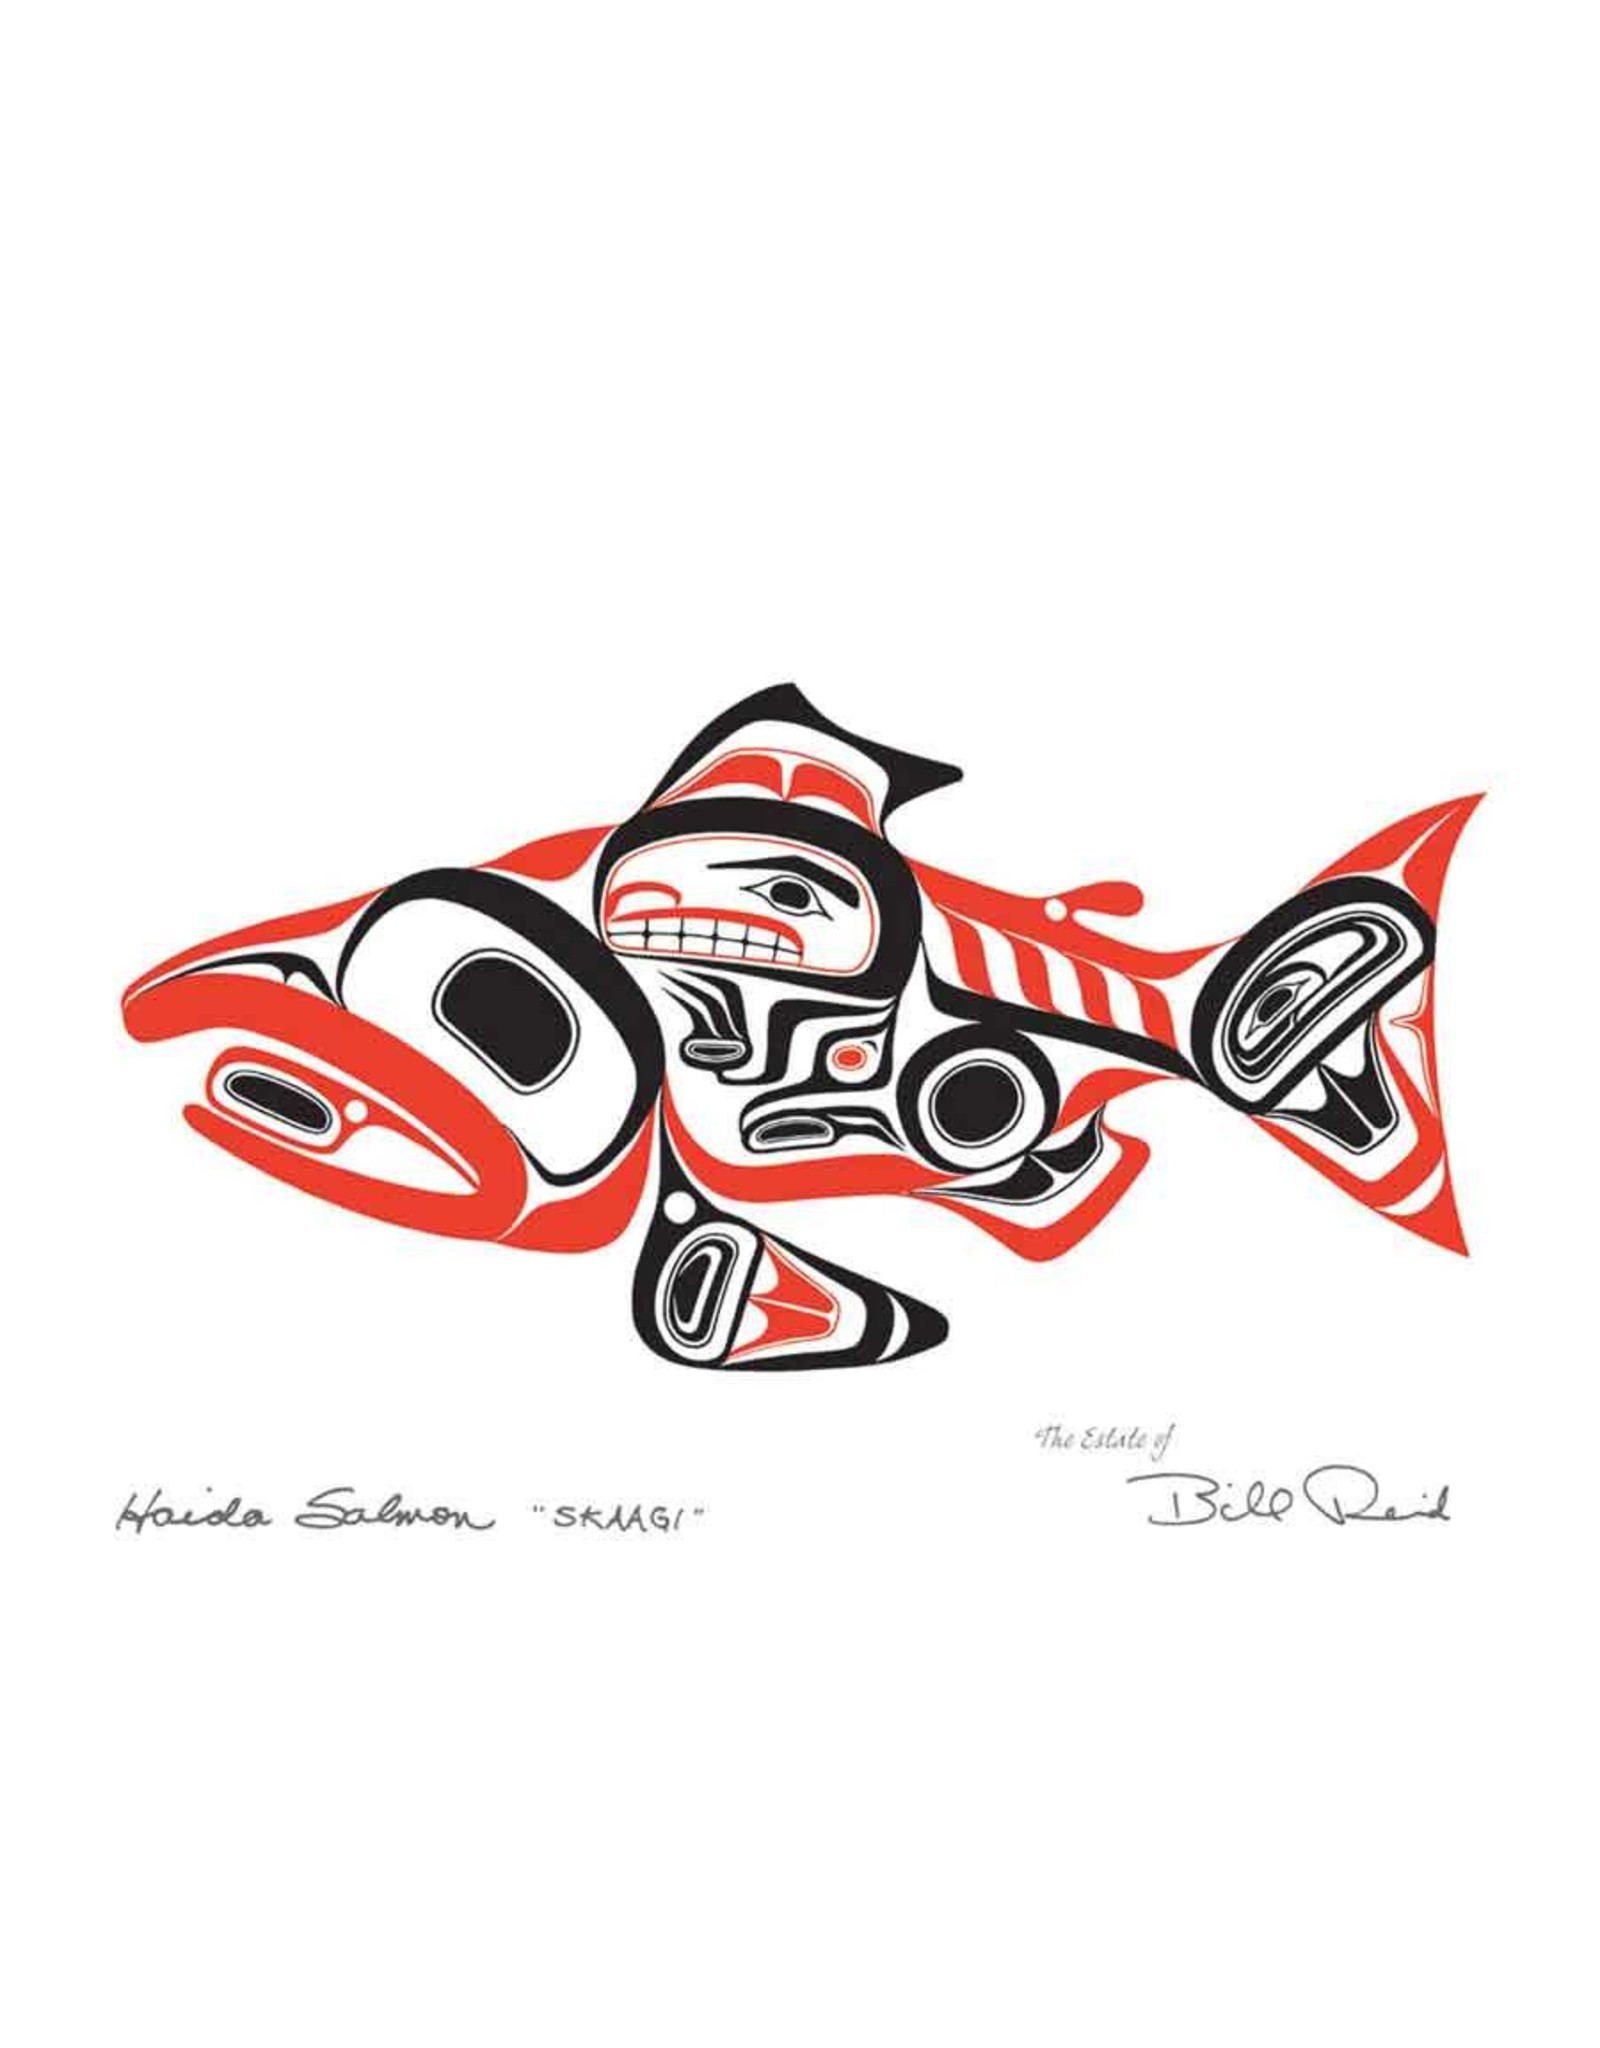 Haida Salmon - SKAAGI par Bill Reid Encadrée 20028